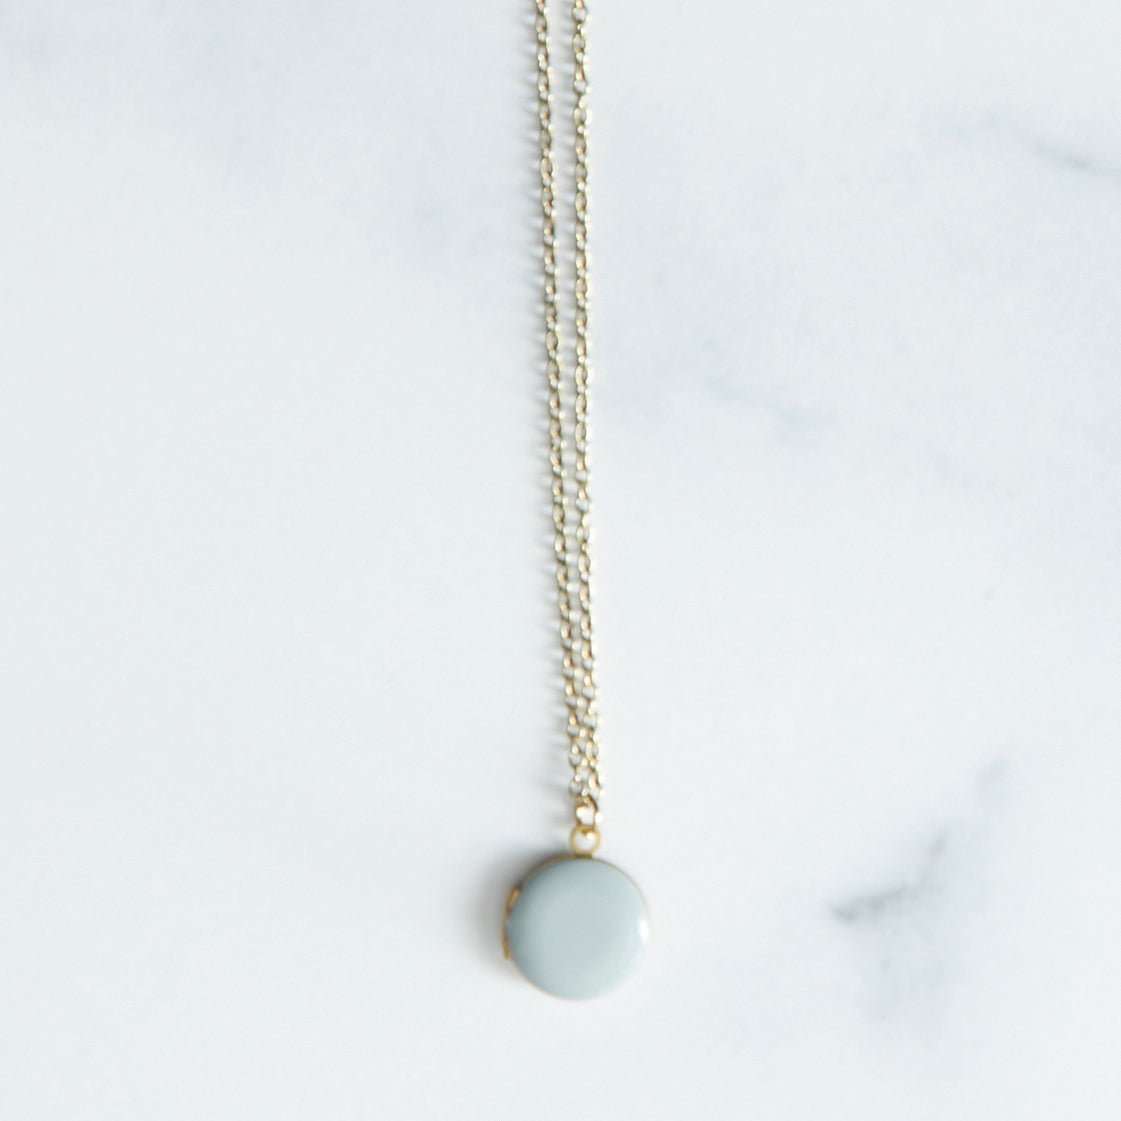 Antique Enameled Baby Locket Necklace - Dove Grey